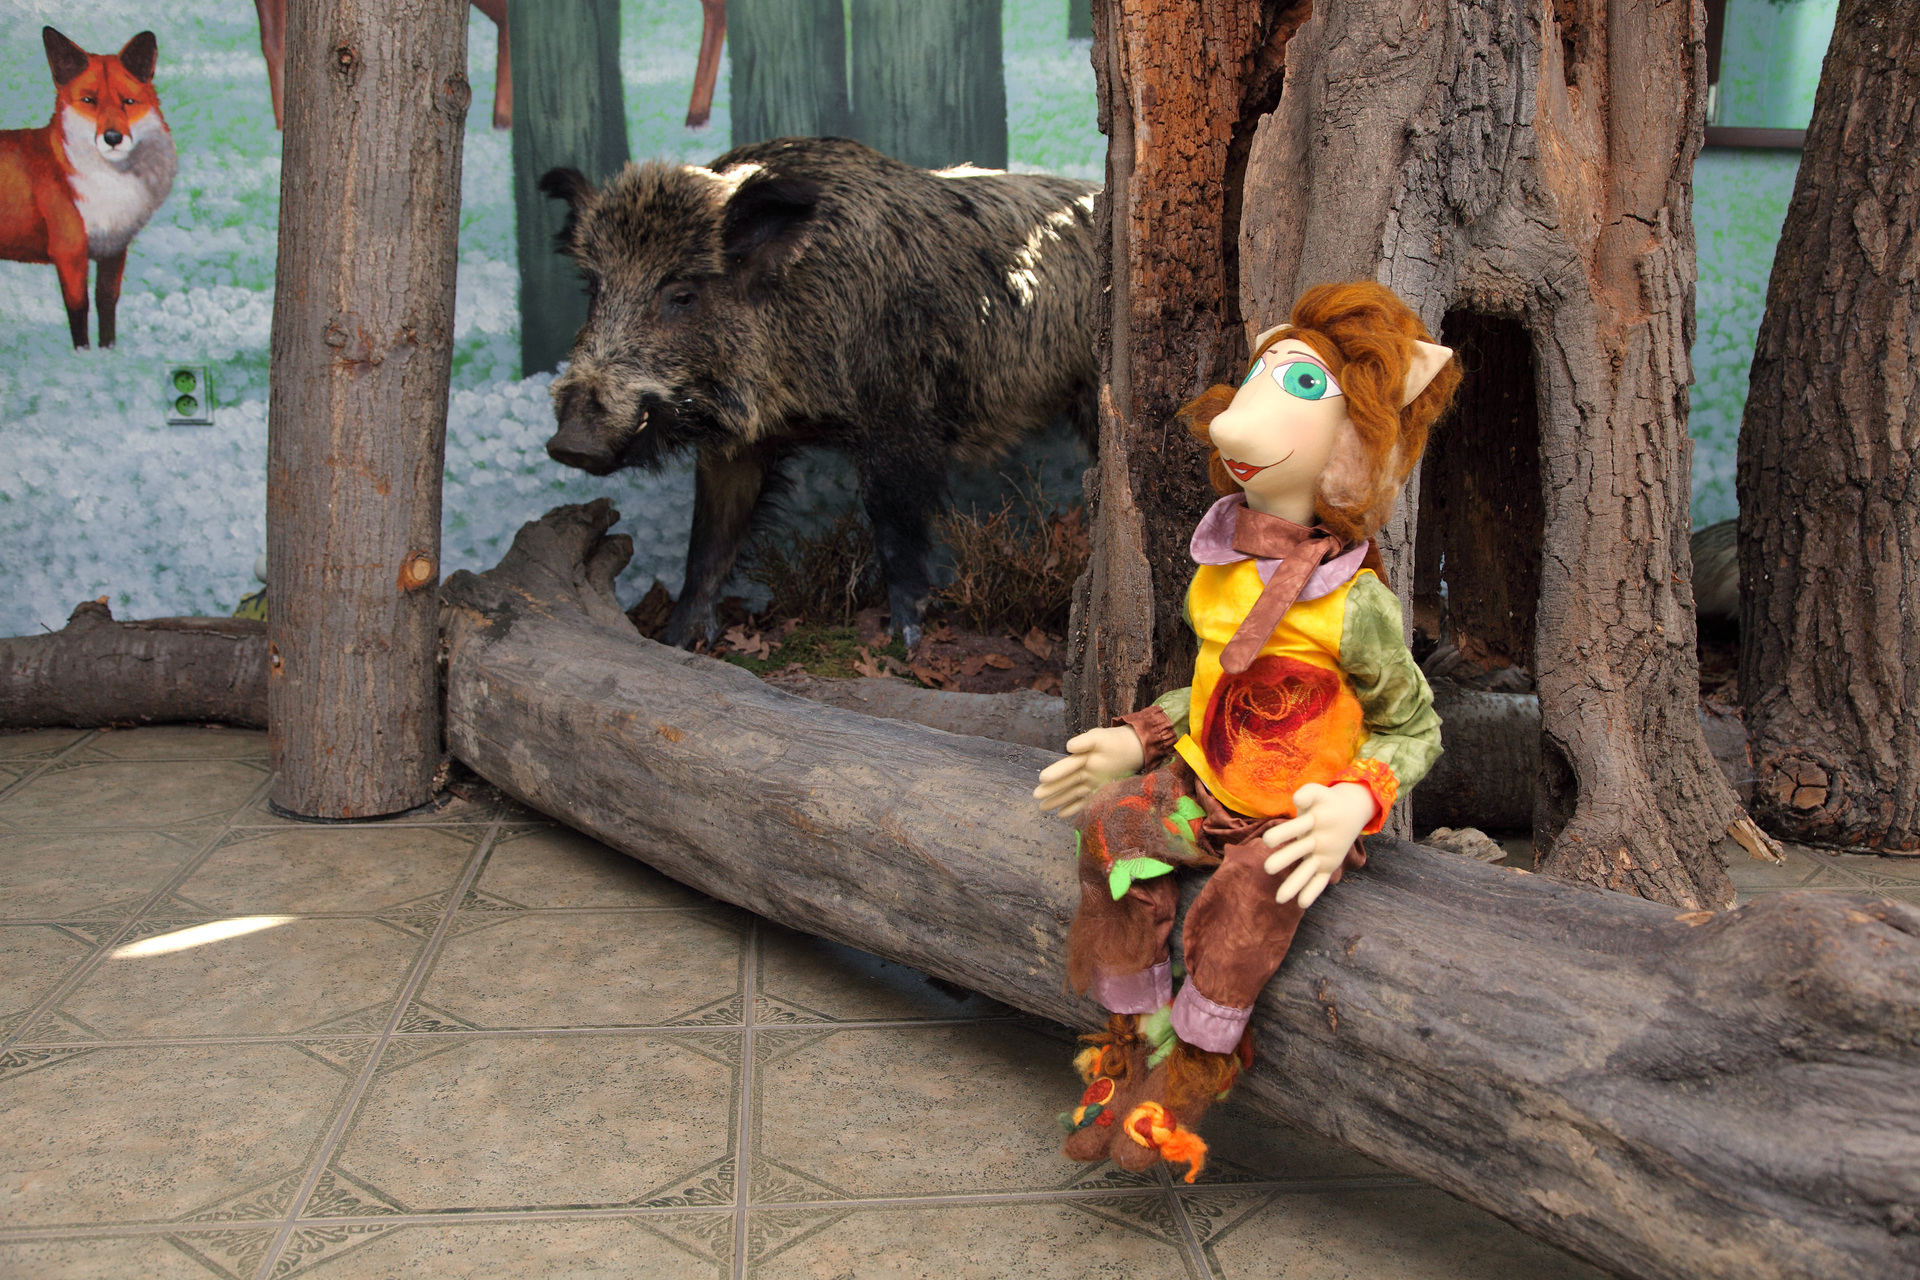 Fairy tale tours of the Dům přírody Poodří wildlife centre